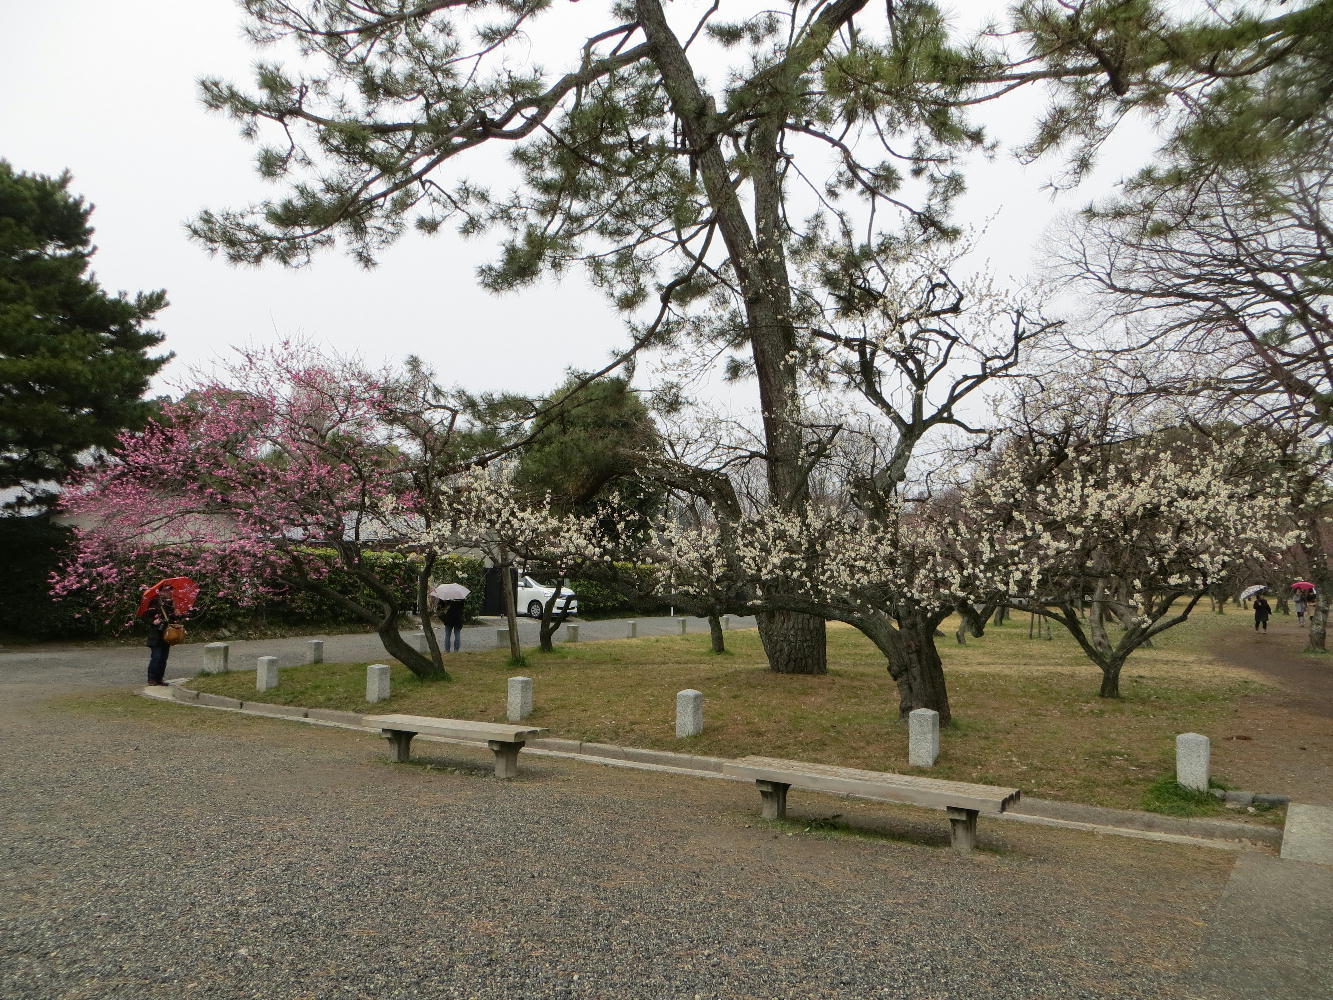 京都御苑の梅